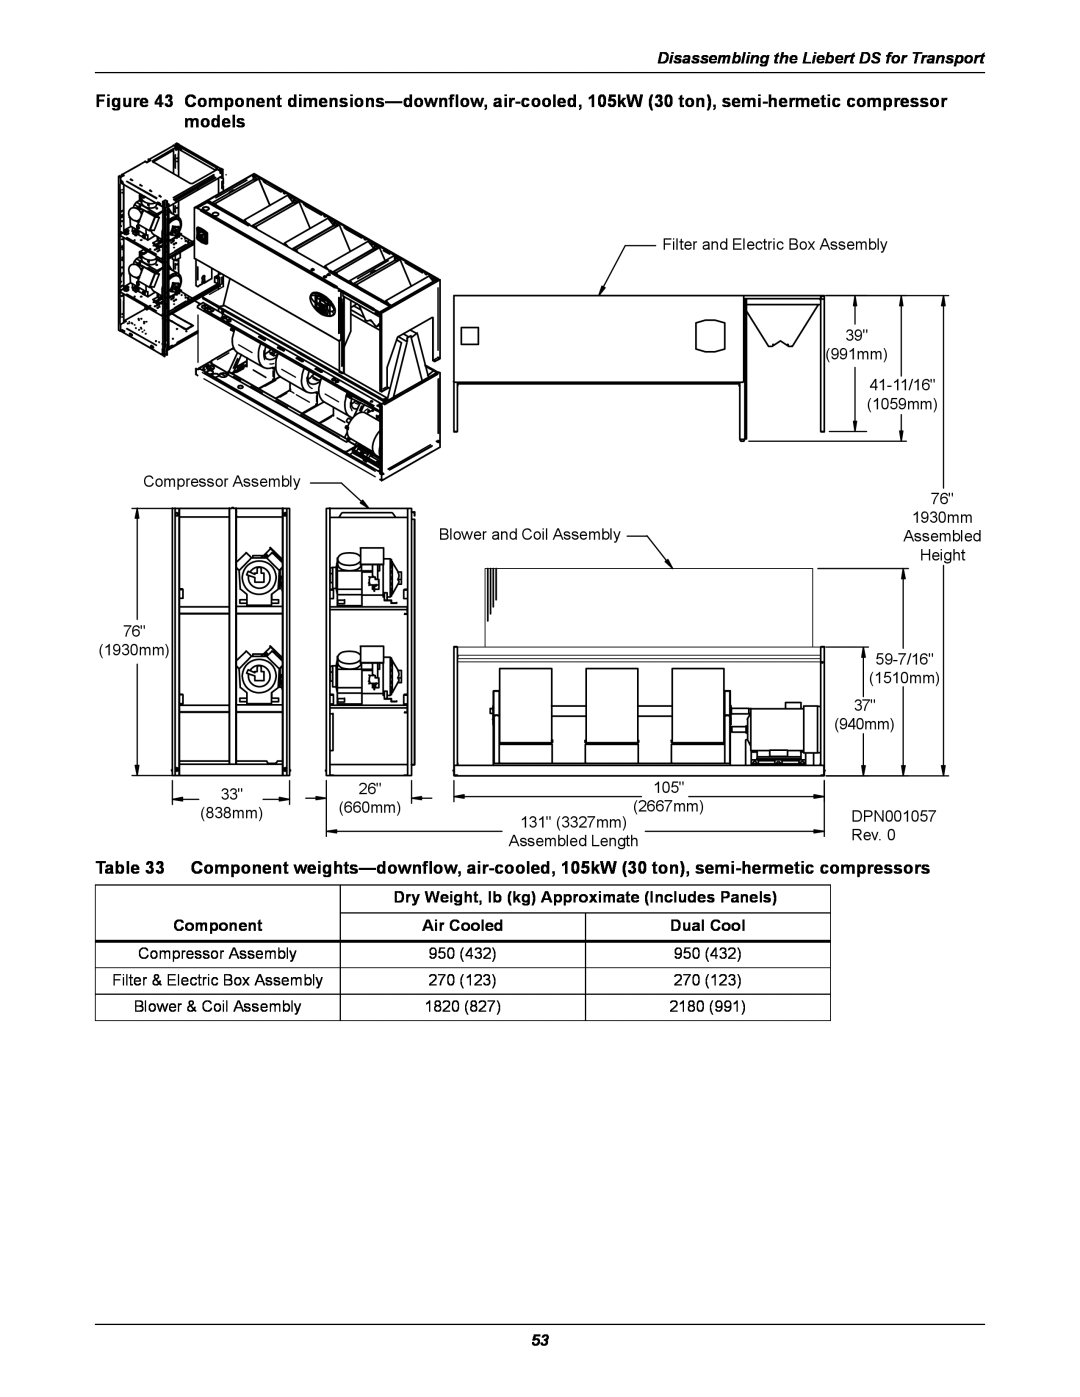 Liebert DS user manual Component dimensions-downflow, air-cooled, 105kW 30 ton, semi-hermetic compressor models 